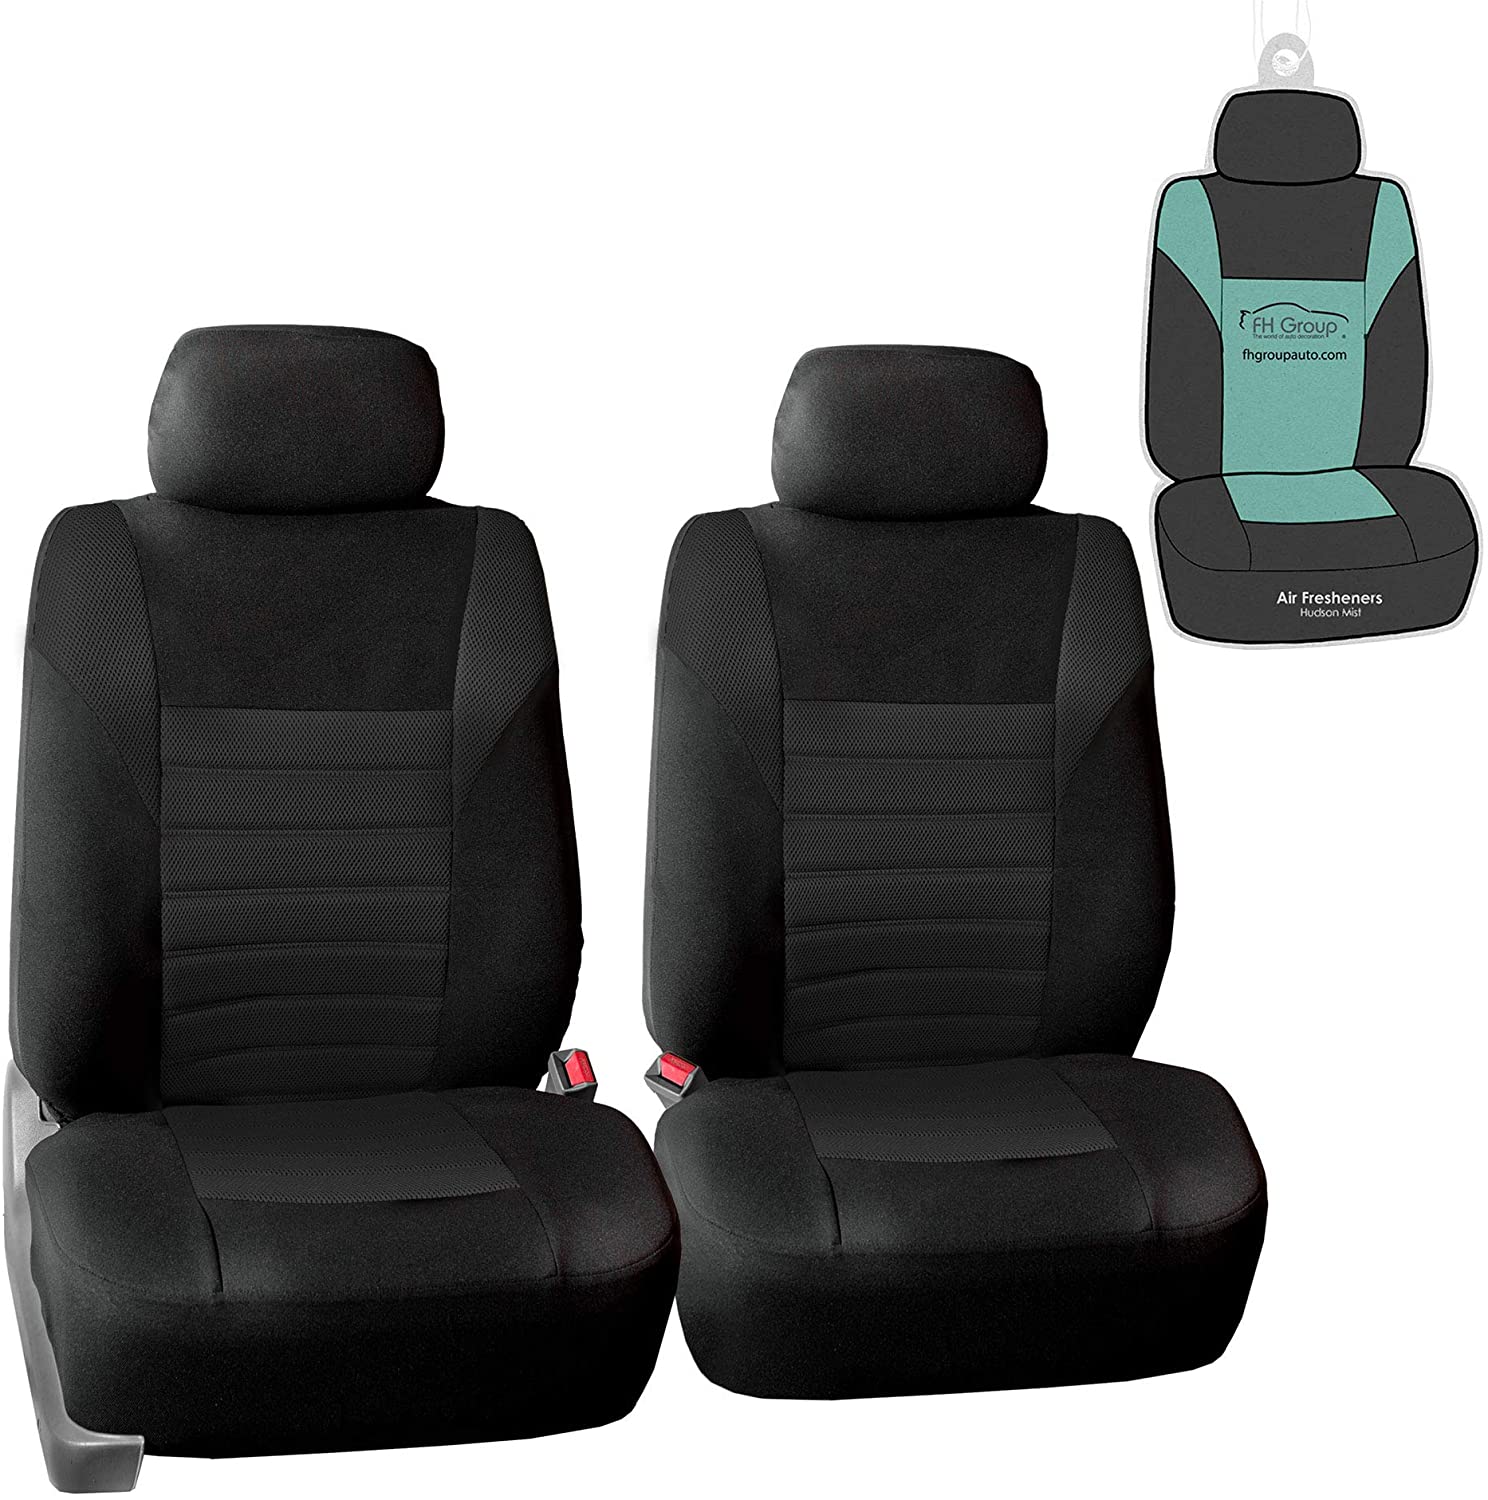 10 Best Seat Covers For Honda Cr V - Black Car Seat Covers For Honda Crv